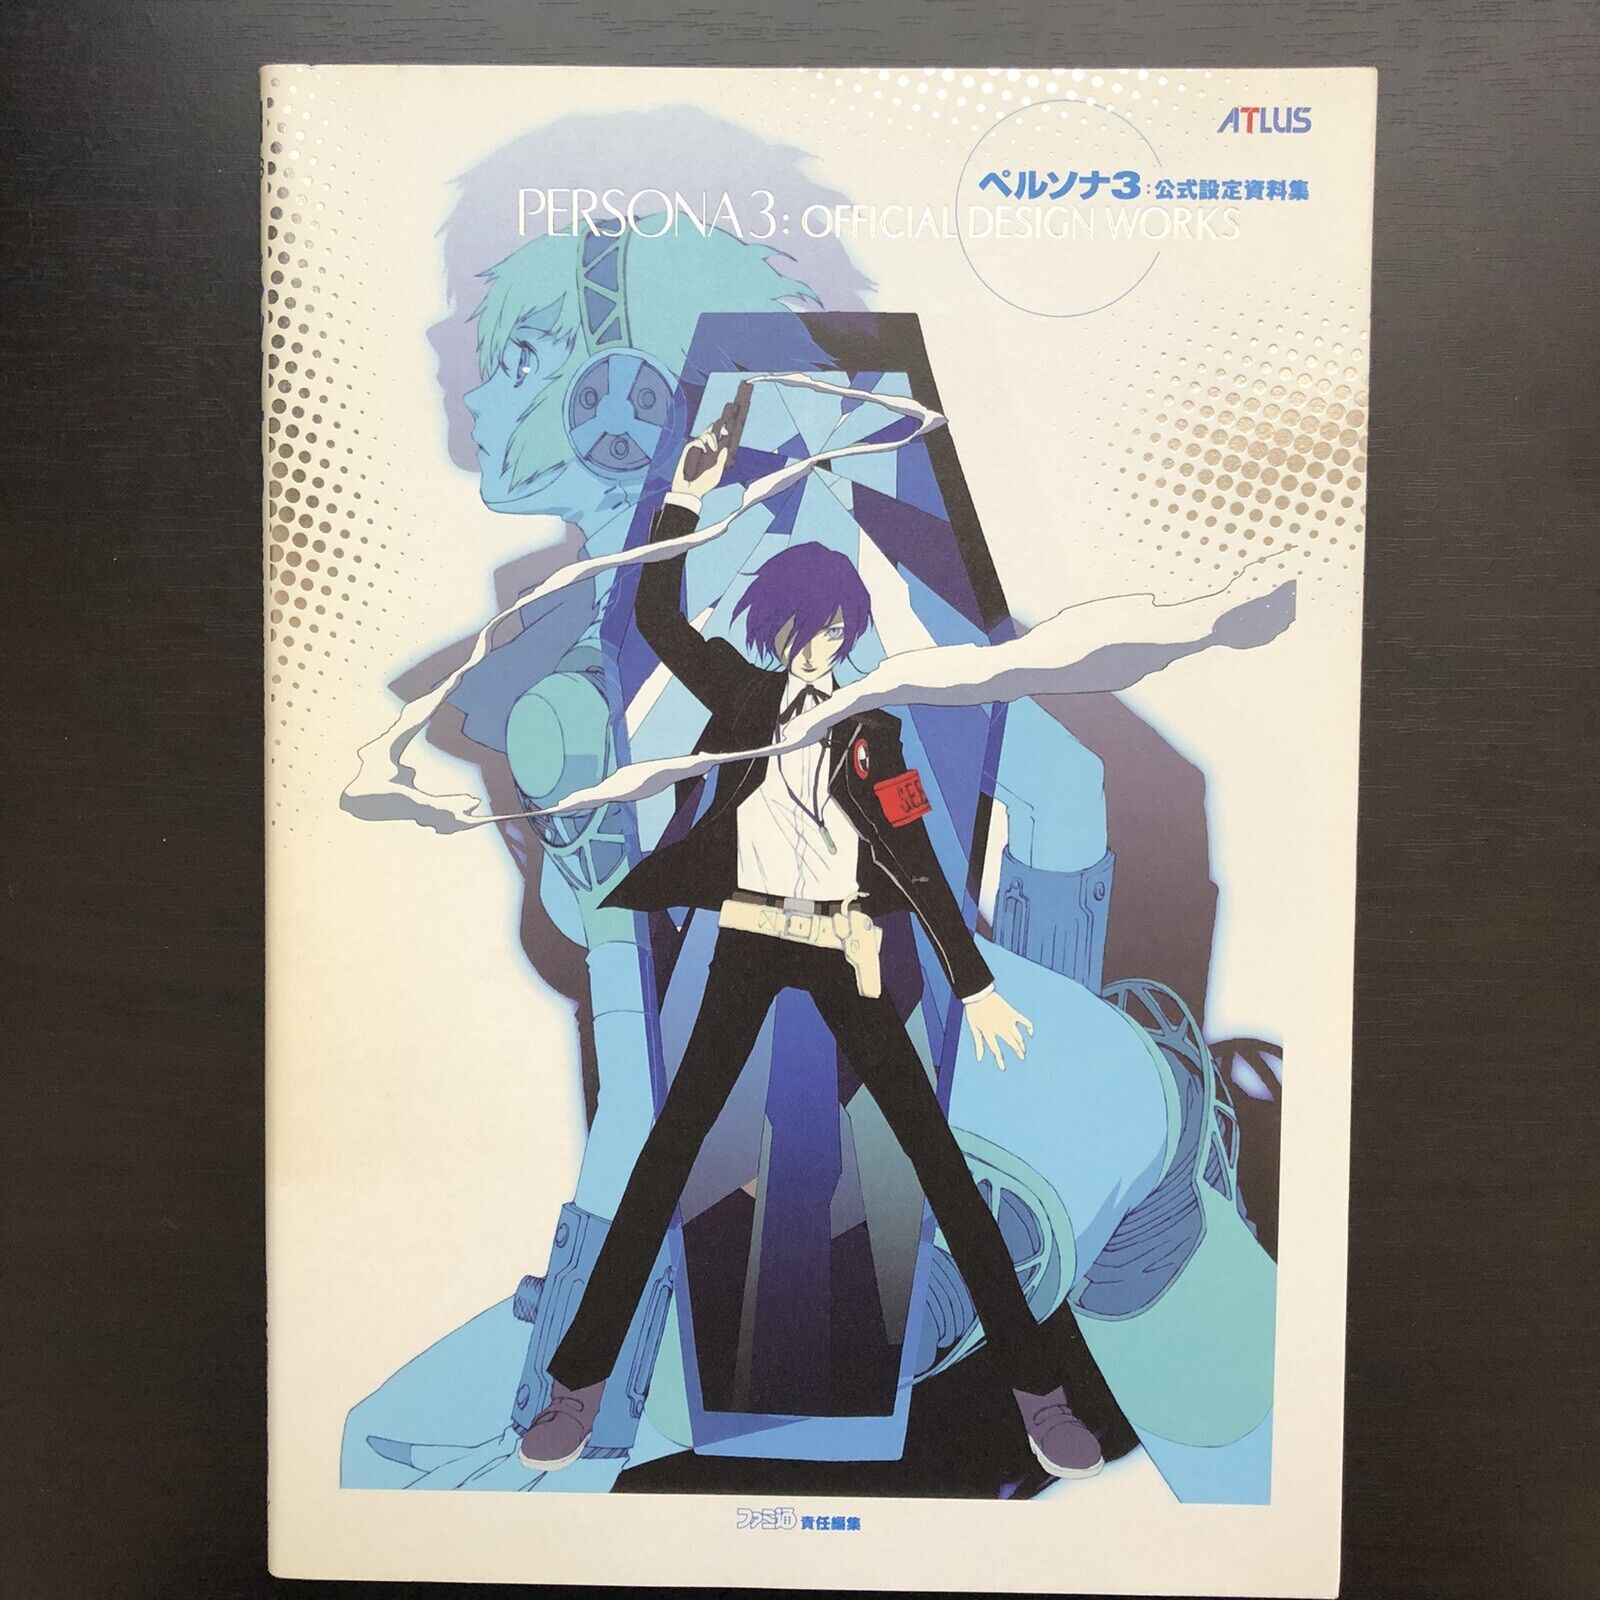 Persona 3 Official Design Works Illustration Game Anime Art Book Illustration